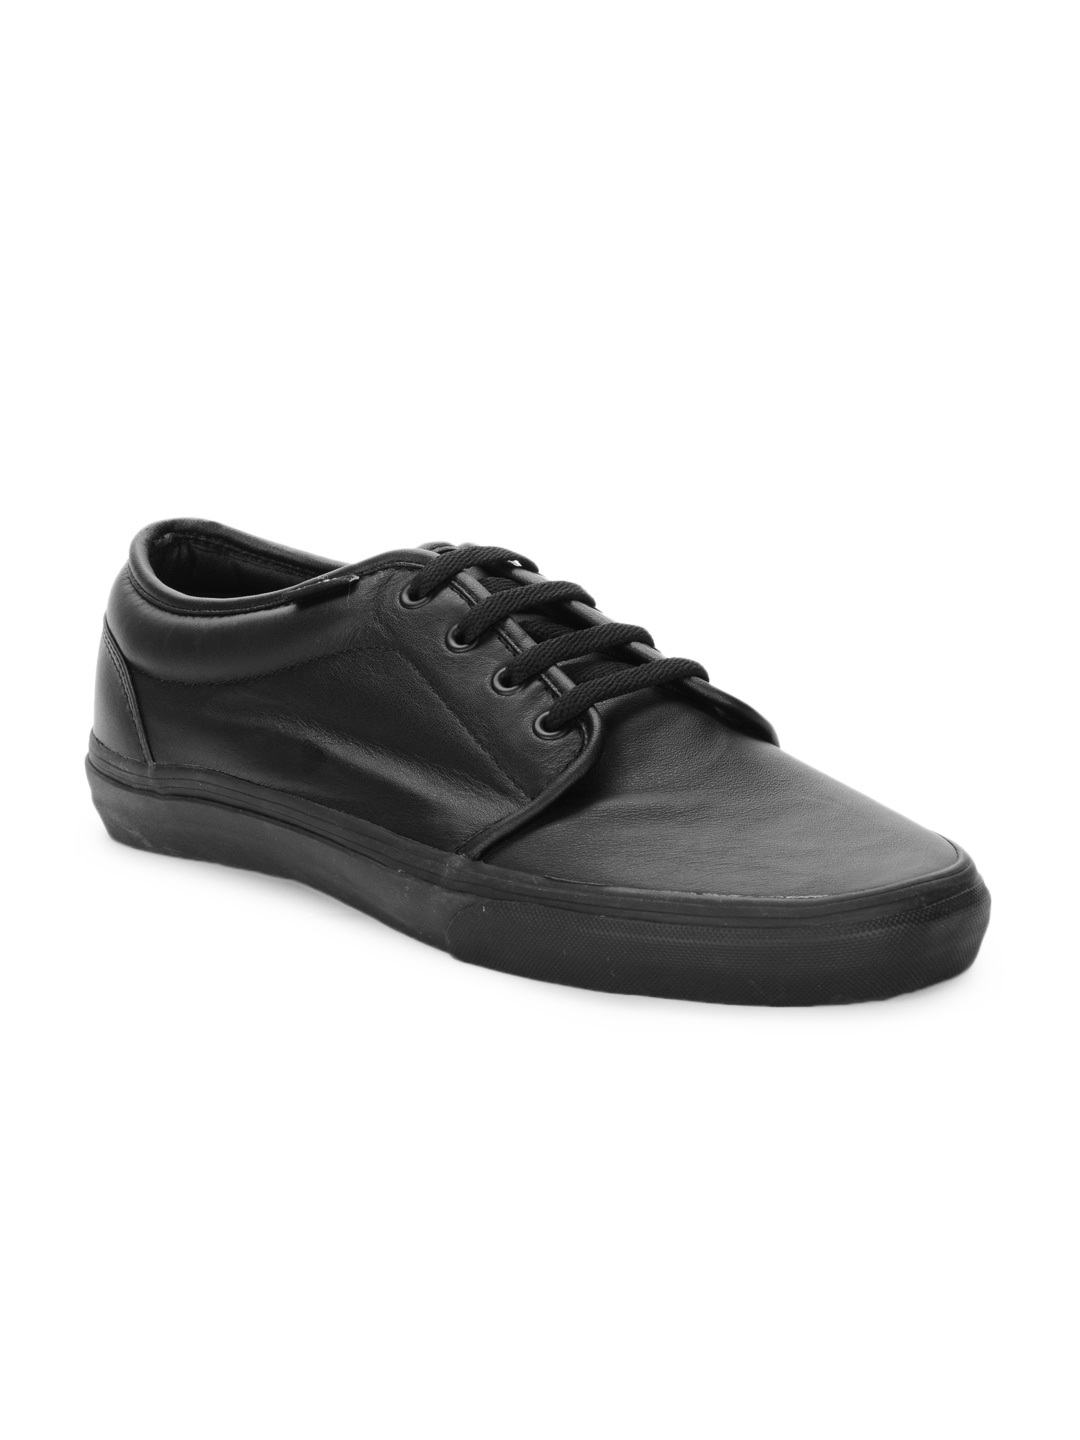 Vans Men Black 106 Vulcanized Italian Leather Shoes